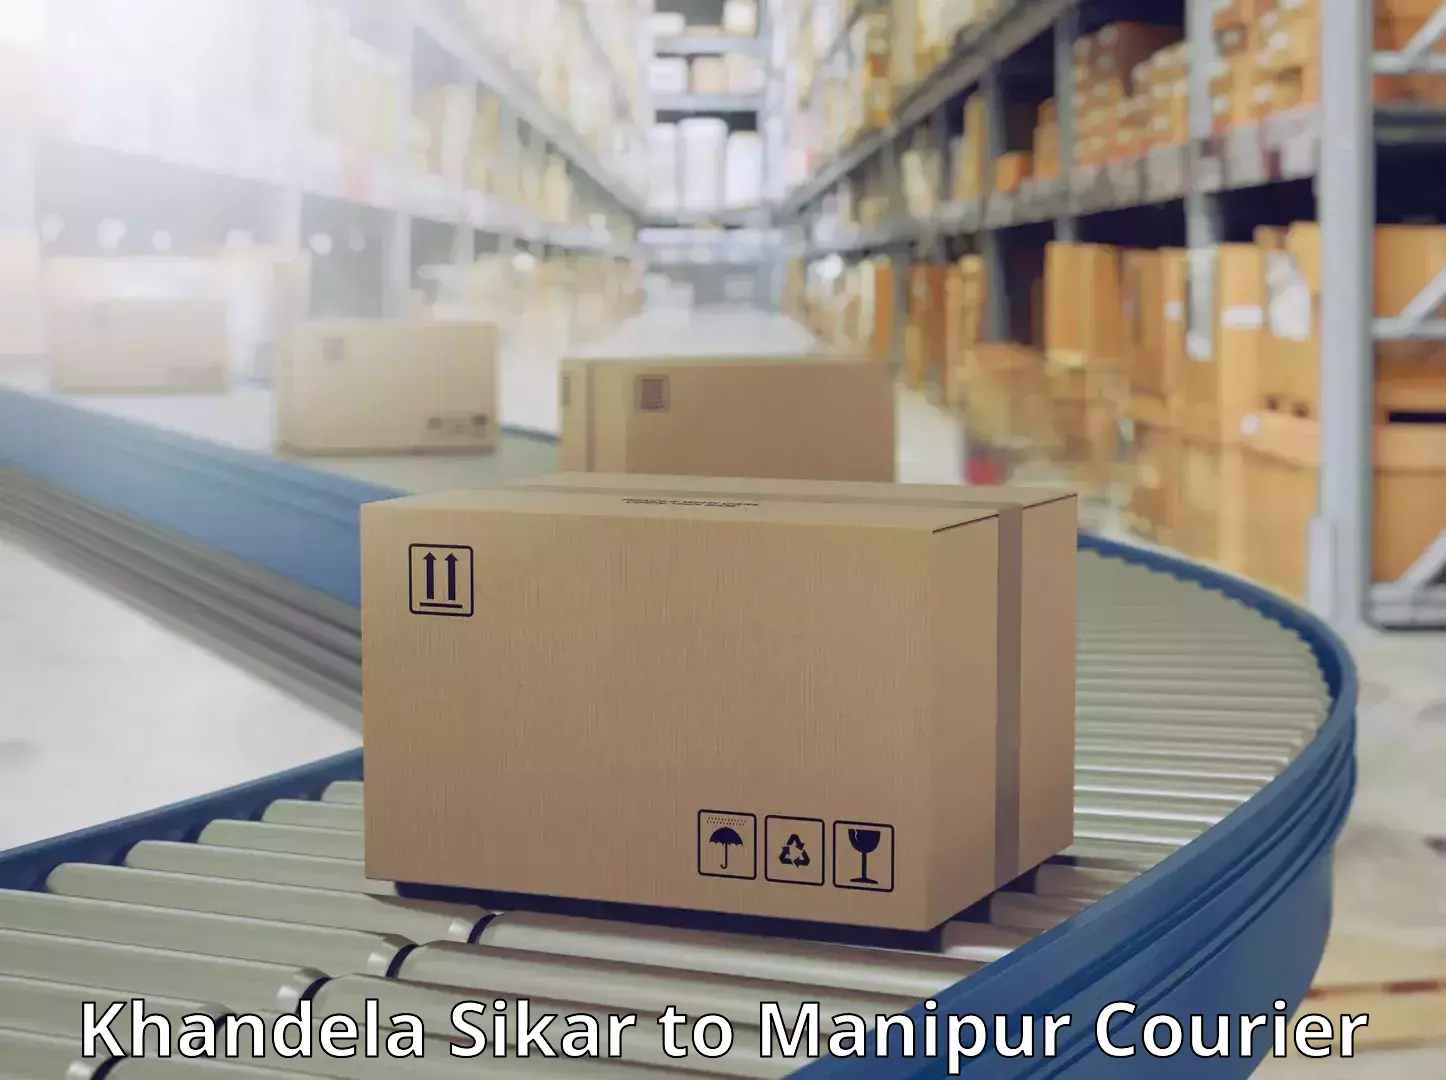 Express logistics providers Khandela Sikar to Manipur